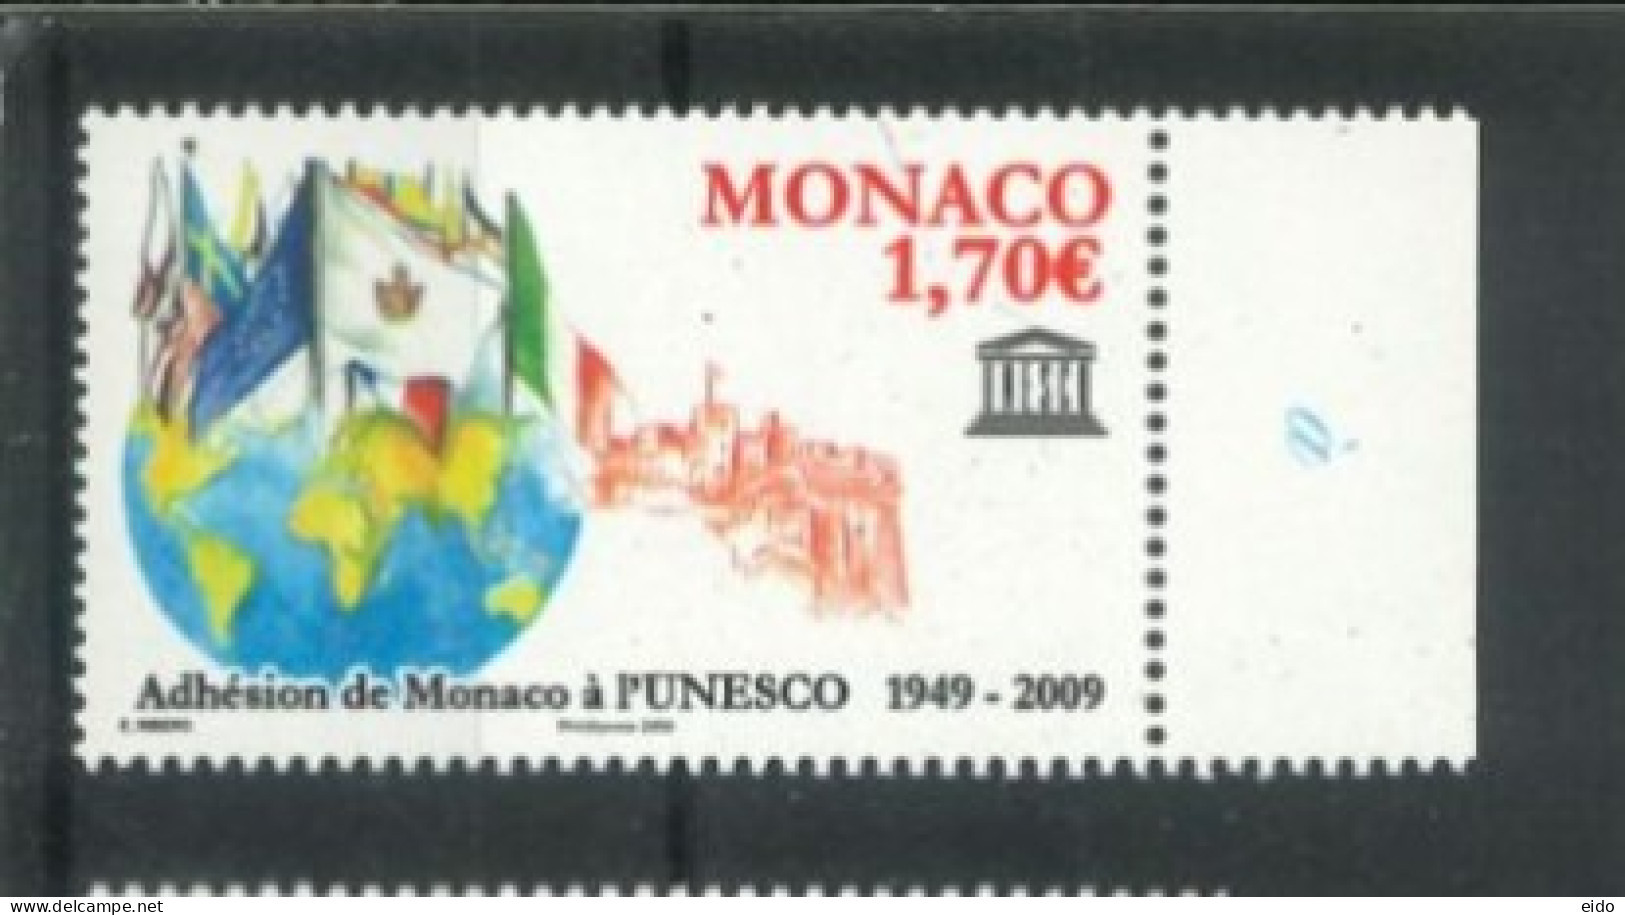 MONACO - 2009, 60th ANNIV OF MONACO ADHESION TO UNESCO STAMP # 2678, UMM(**). - Unused Stamps